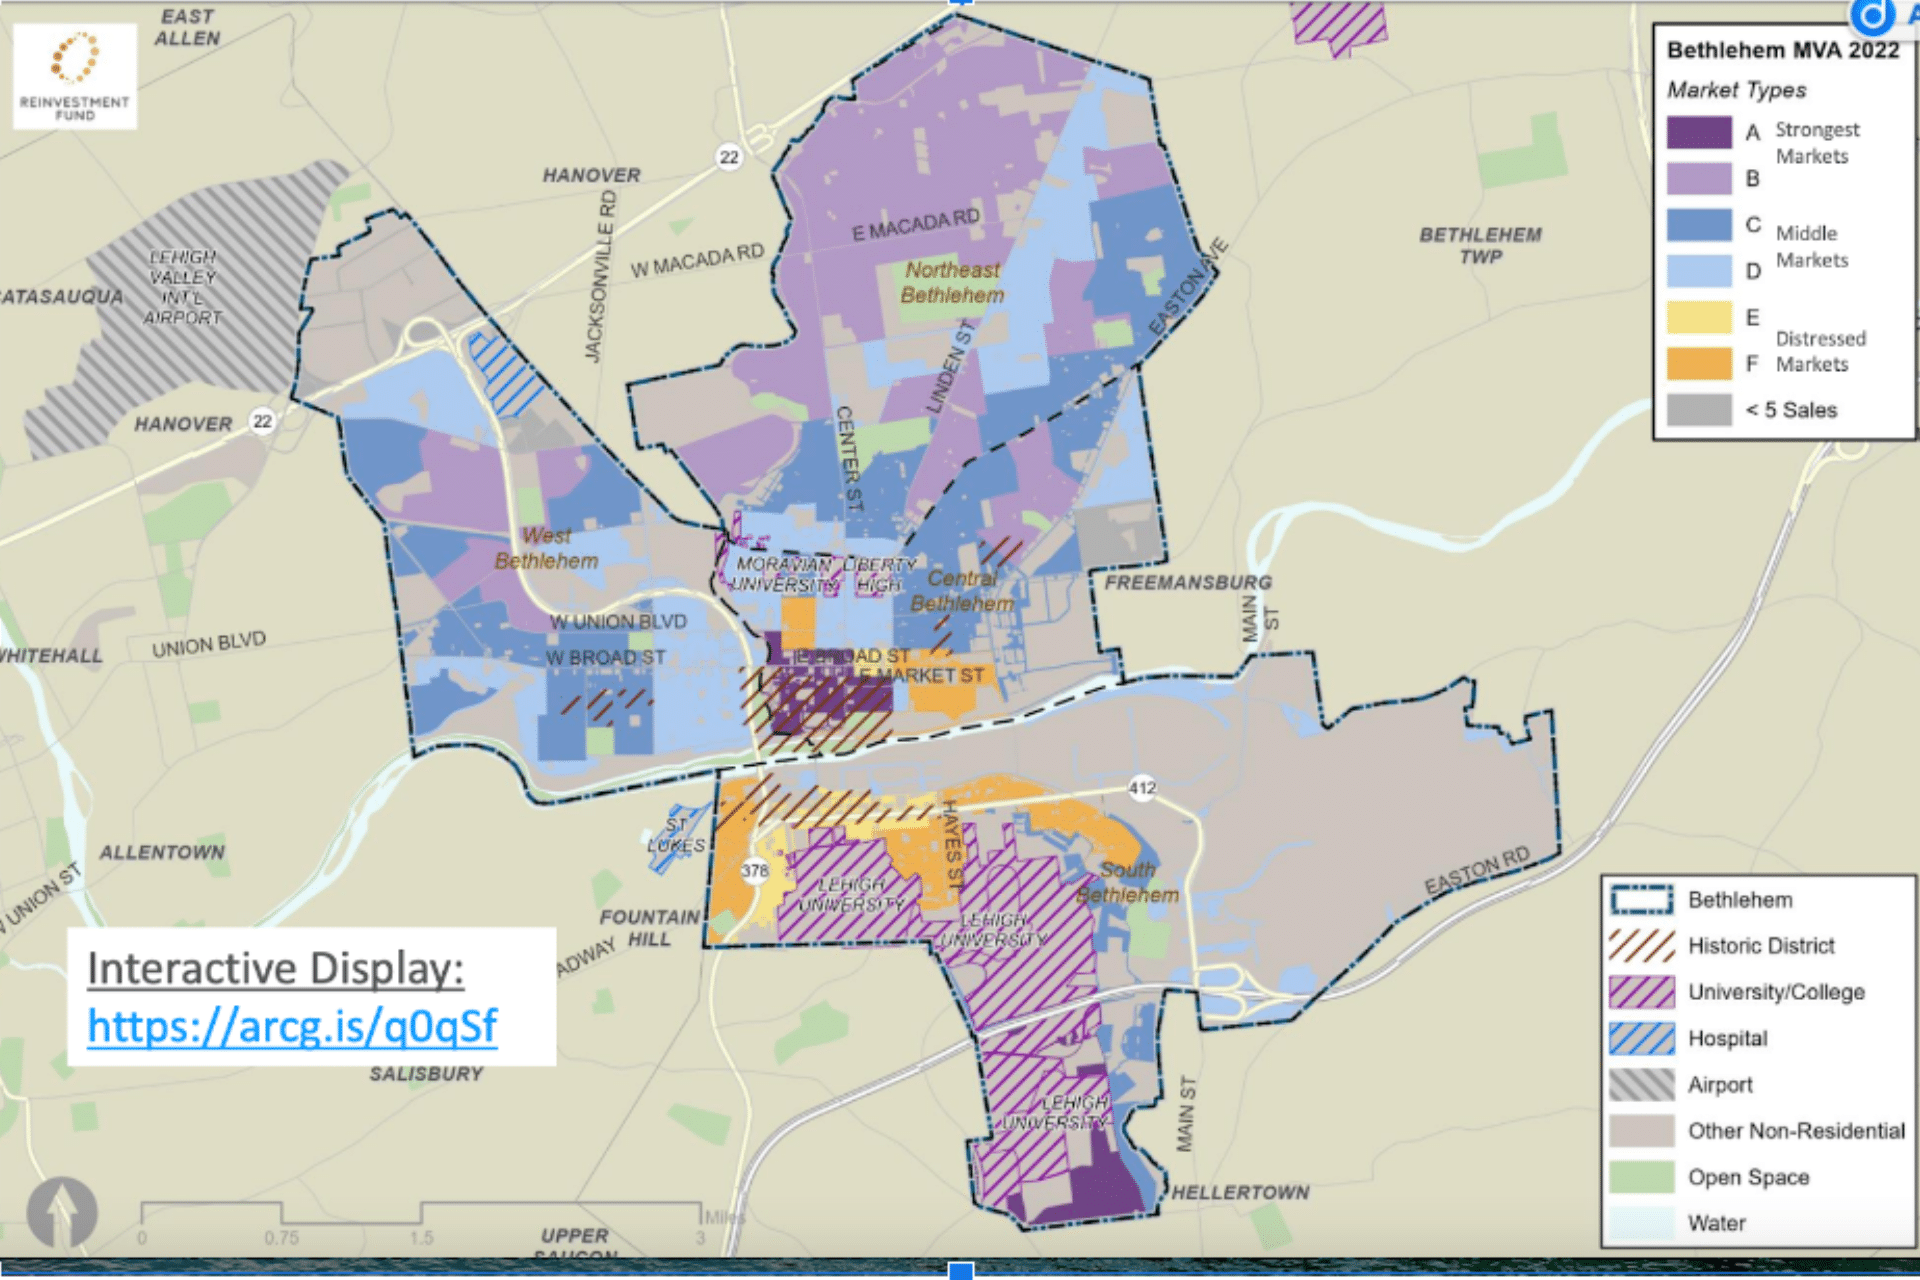 Bethlehem, Pennsylvania, interactive display map is shown